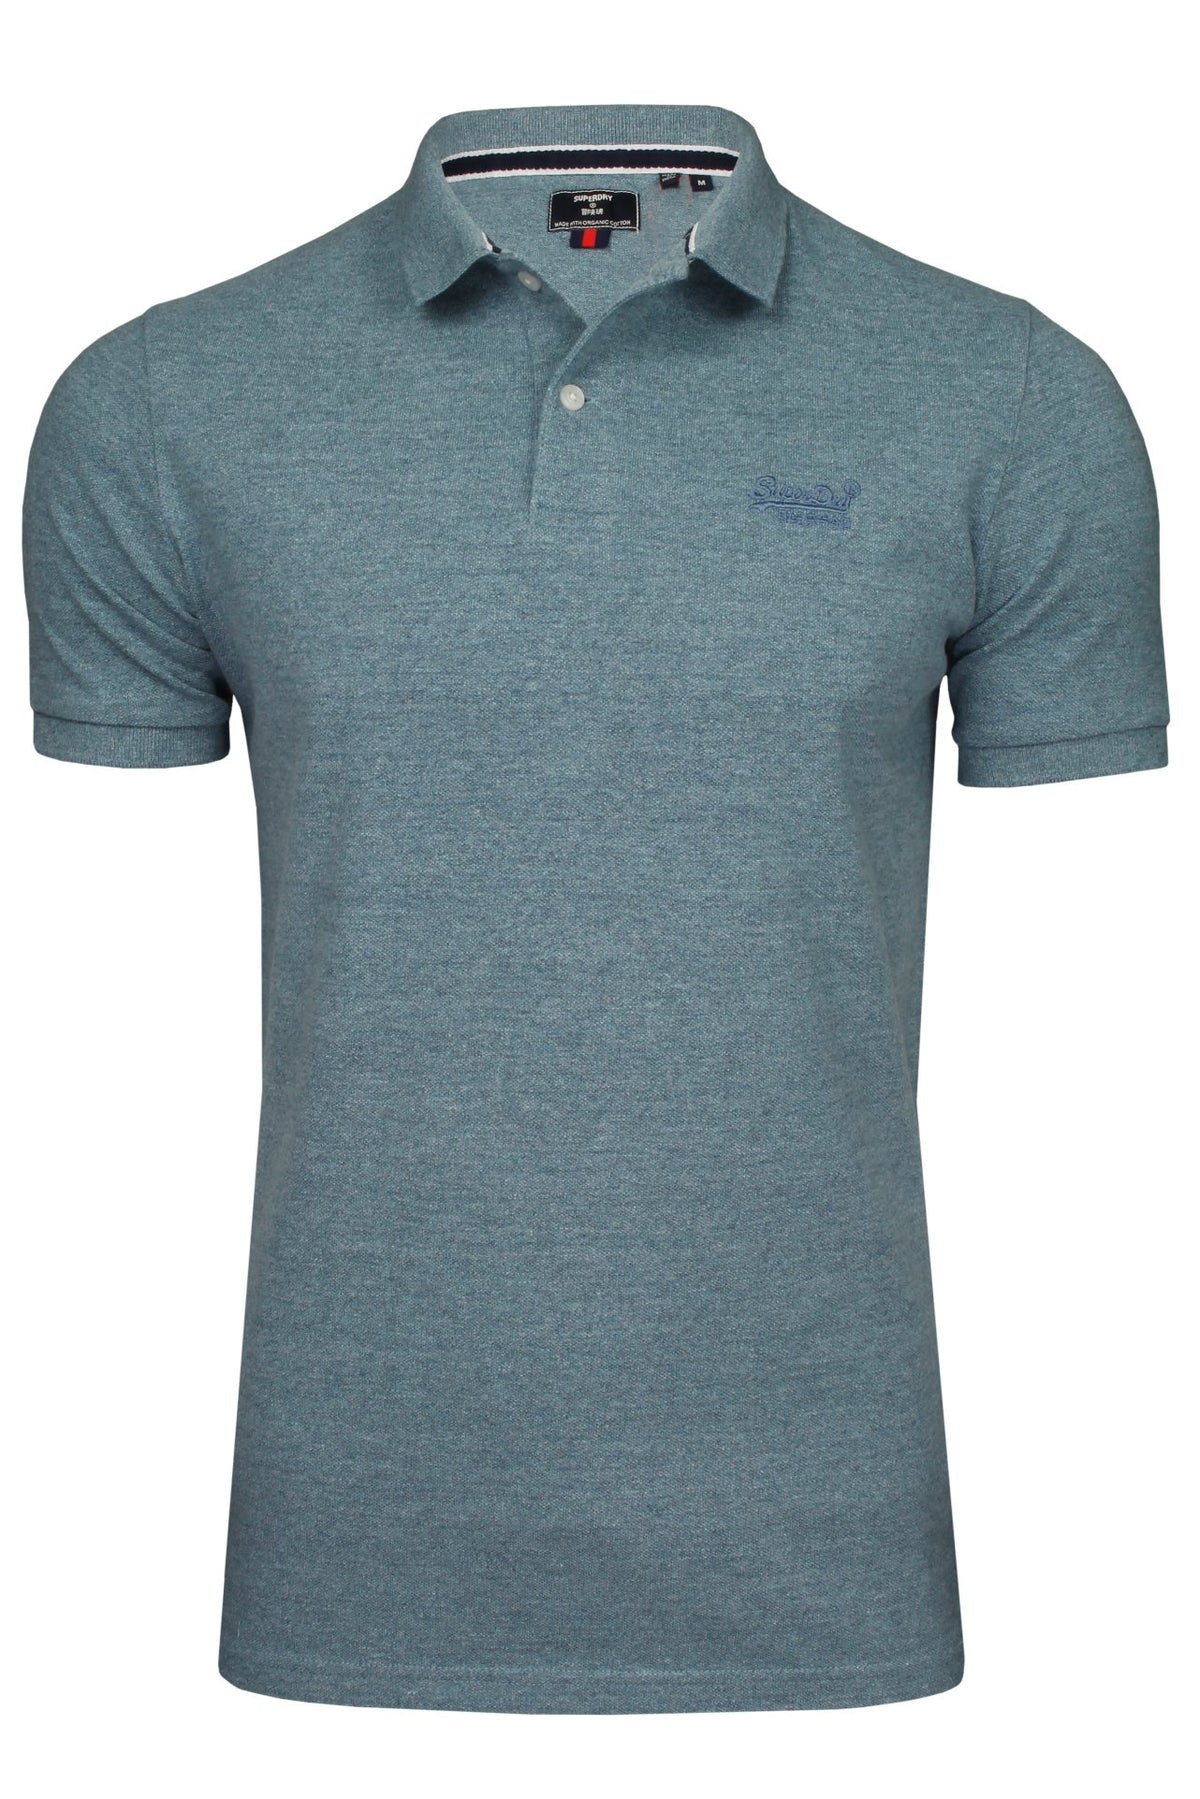 Superdry Polo Shirt 'Classic Pique Polo' Short Sleeve, 01, M1110247A, Desert Sky Blue Grit